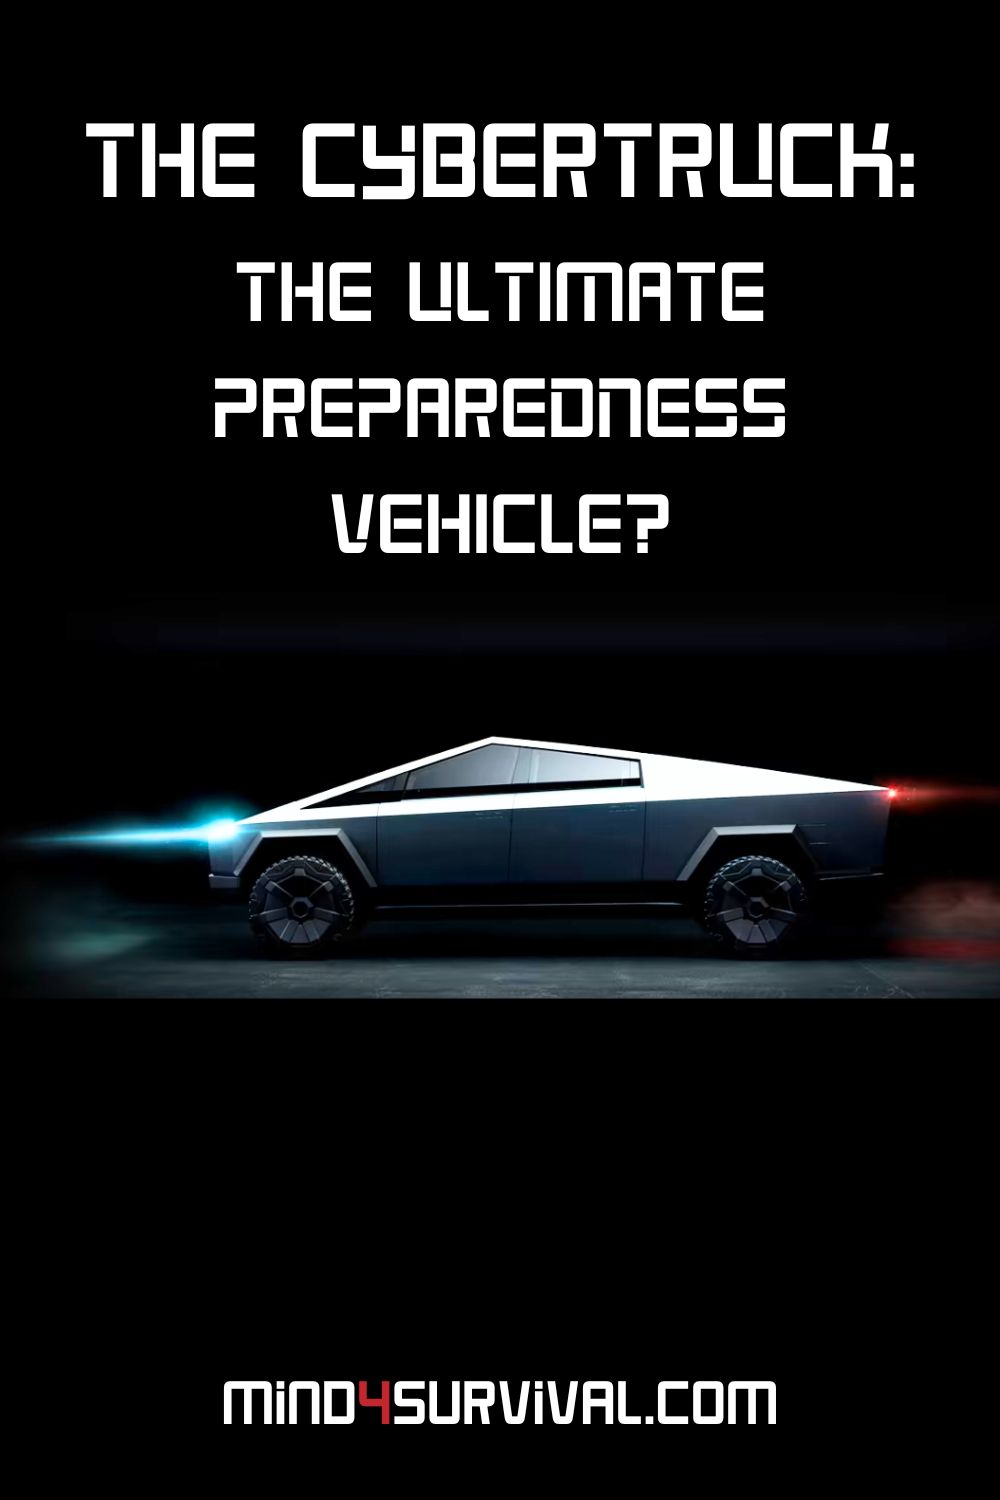 The Cybertruck: The Ultimate Preparedness Vehicle?